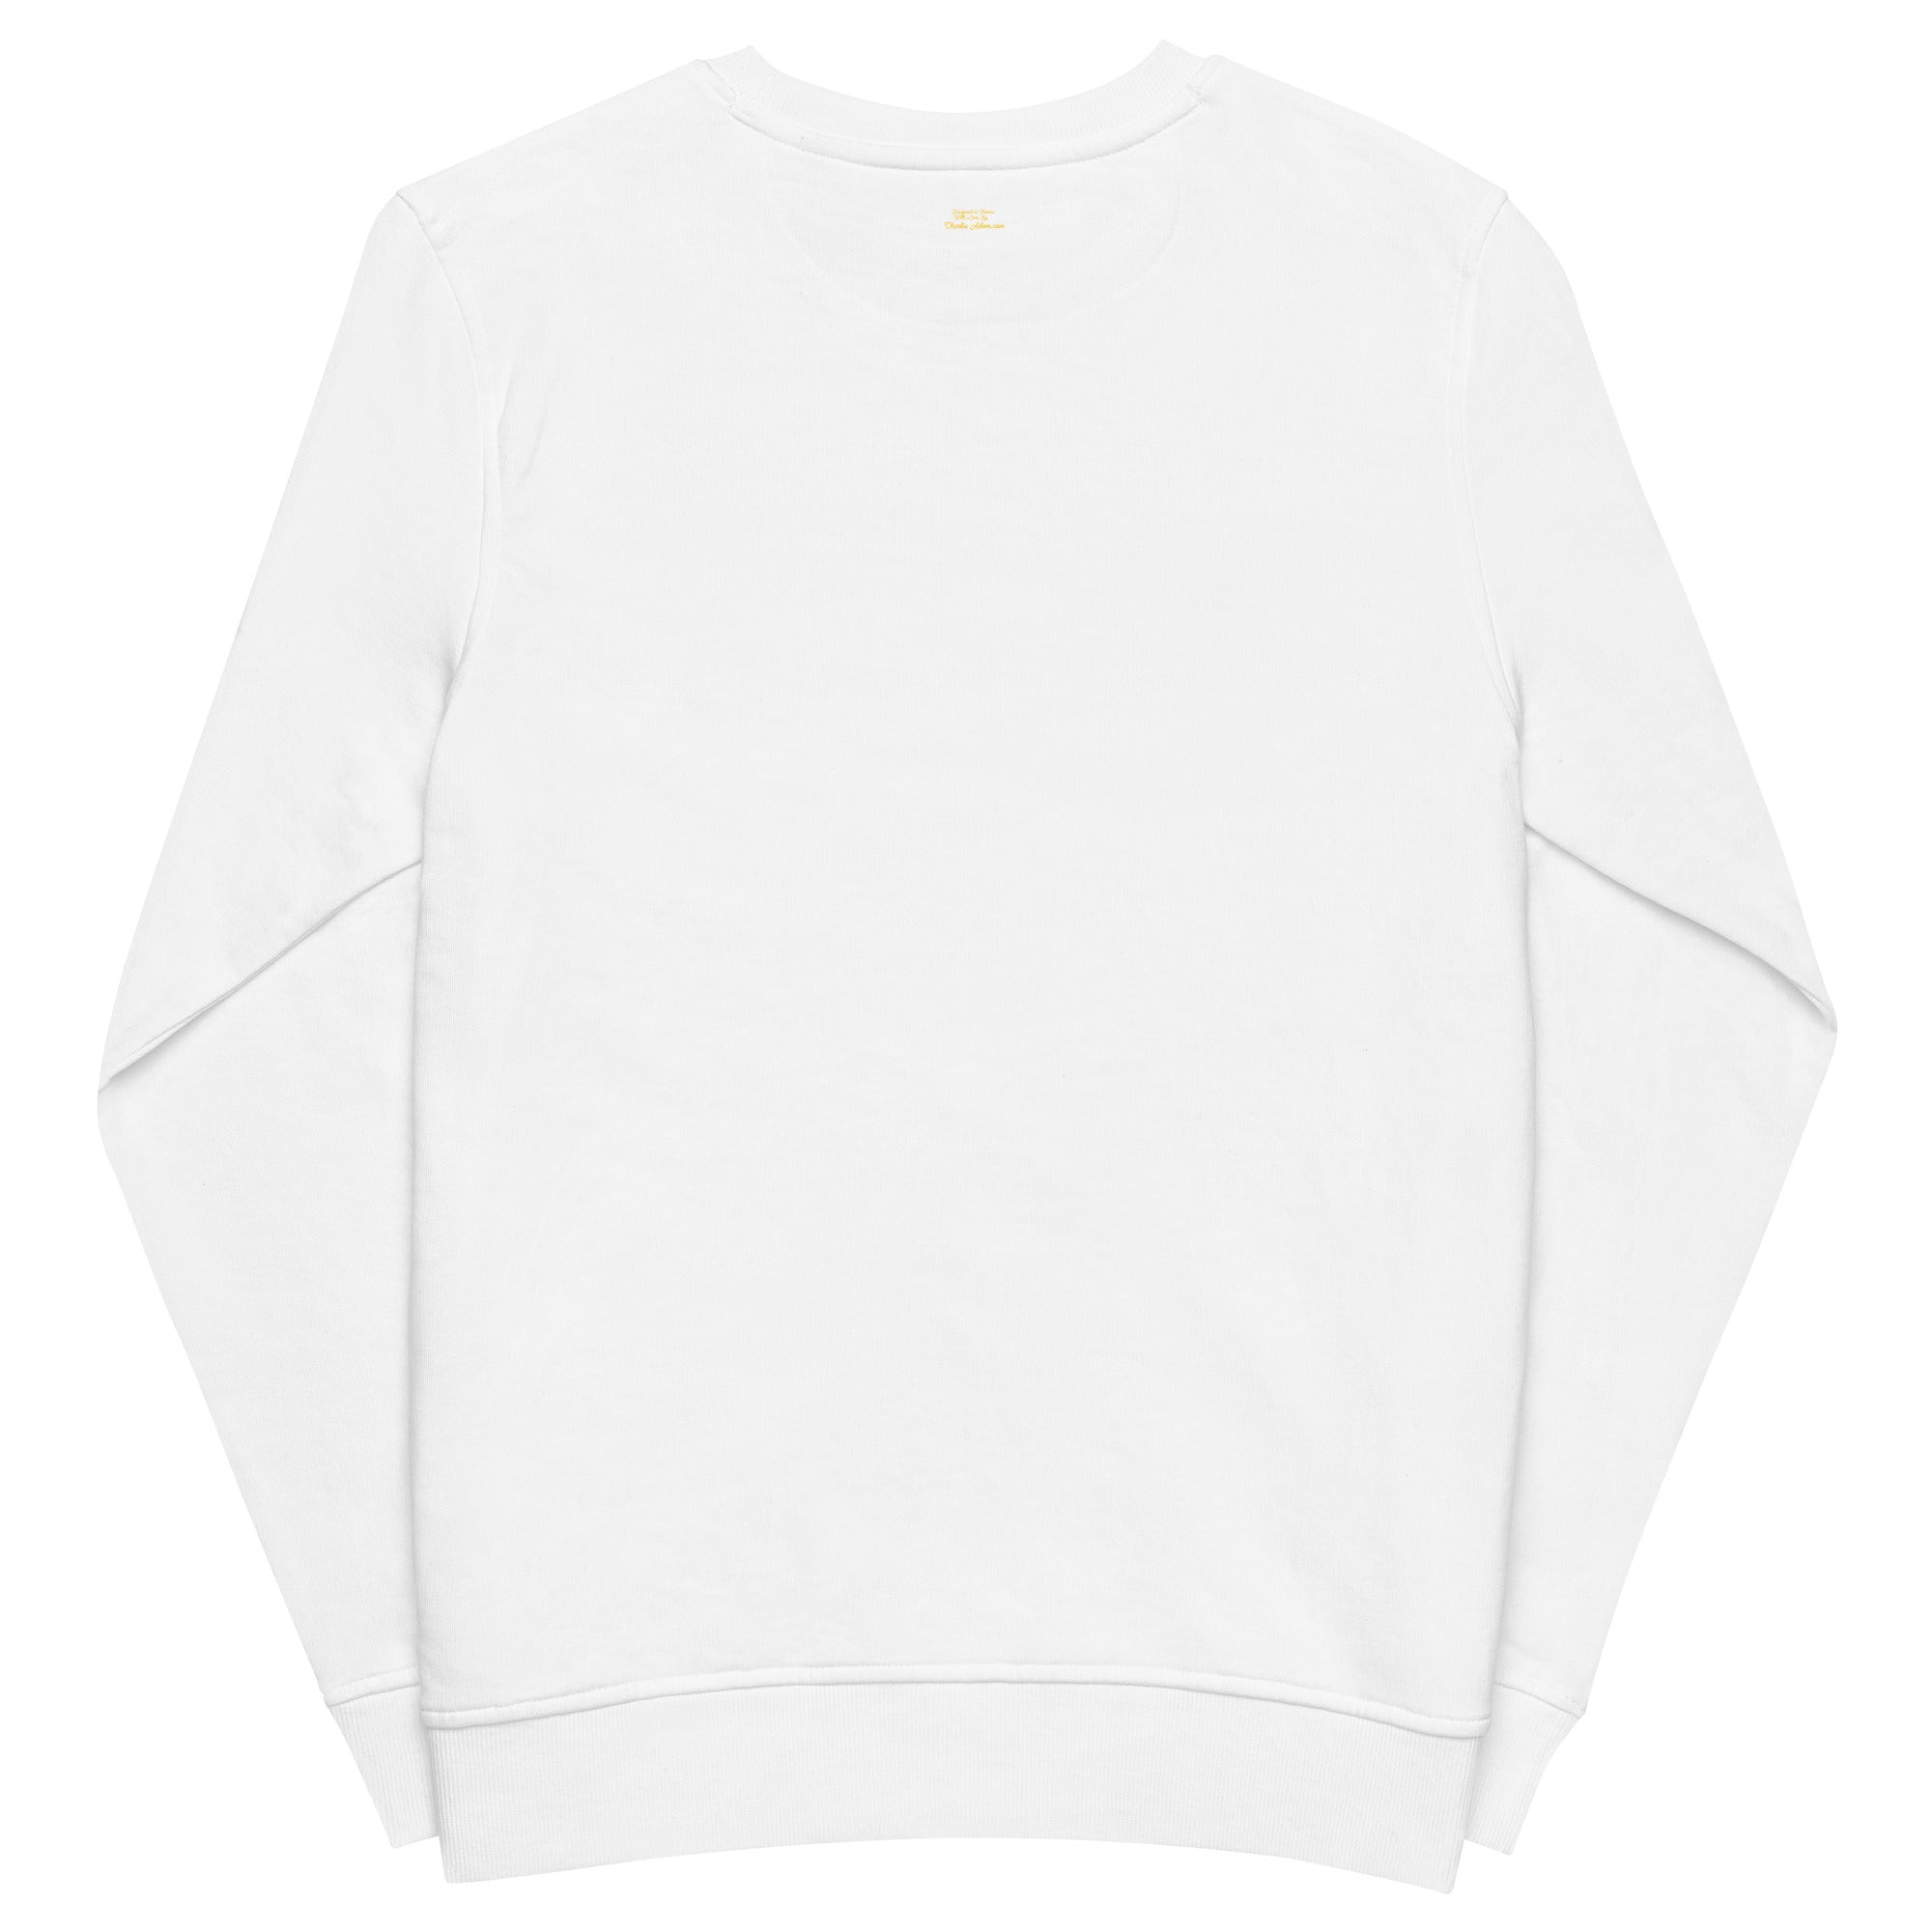 Unisex organic sweatshirt Oh Bonne Mer 2 embroided